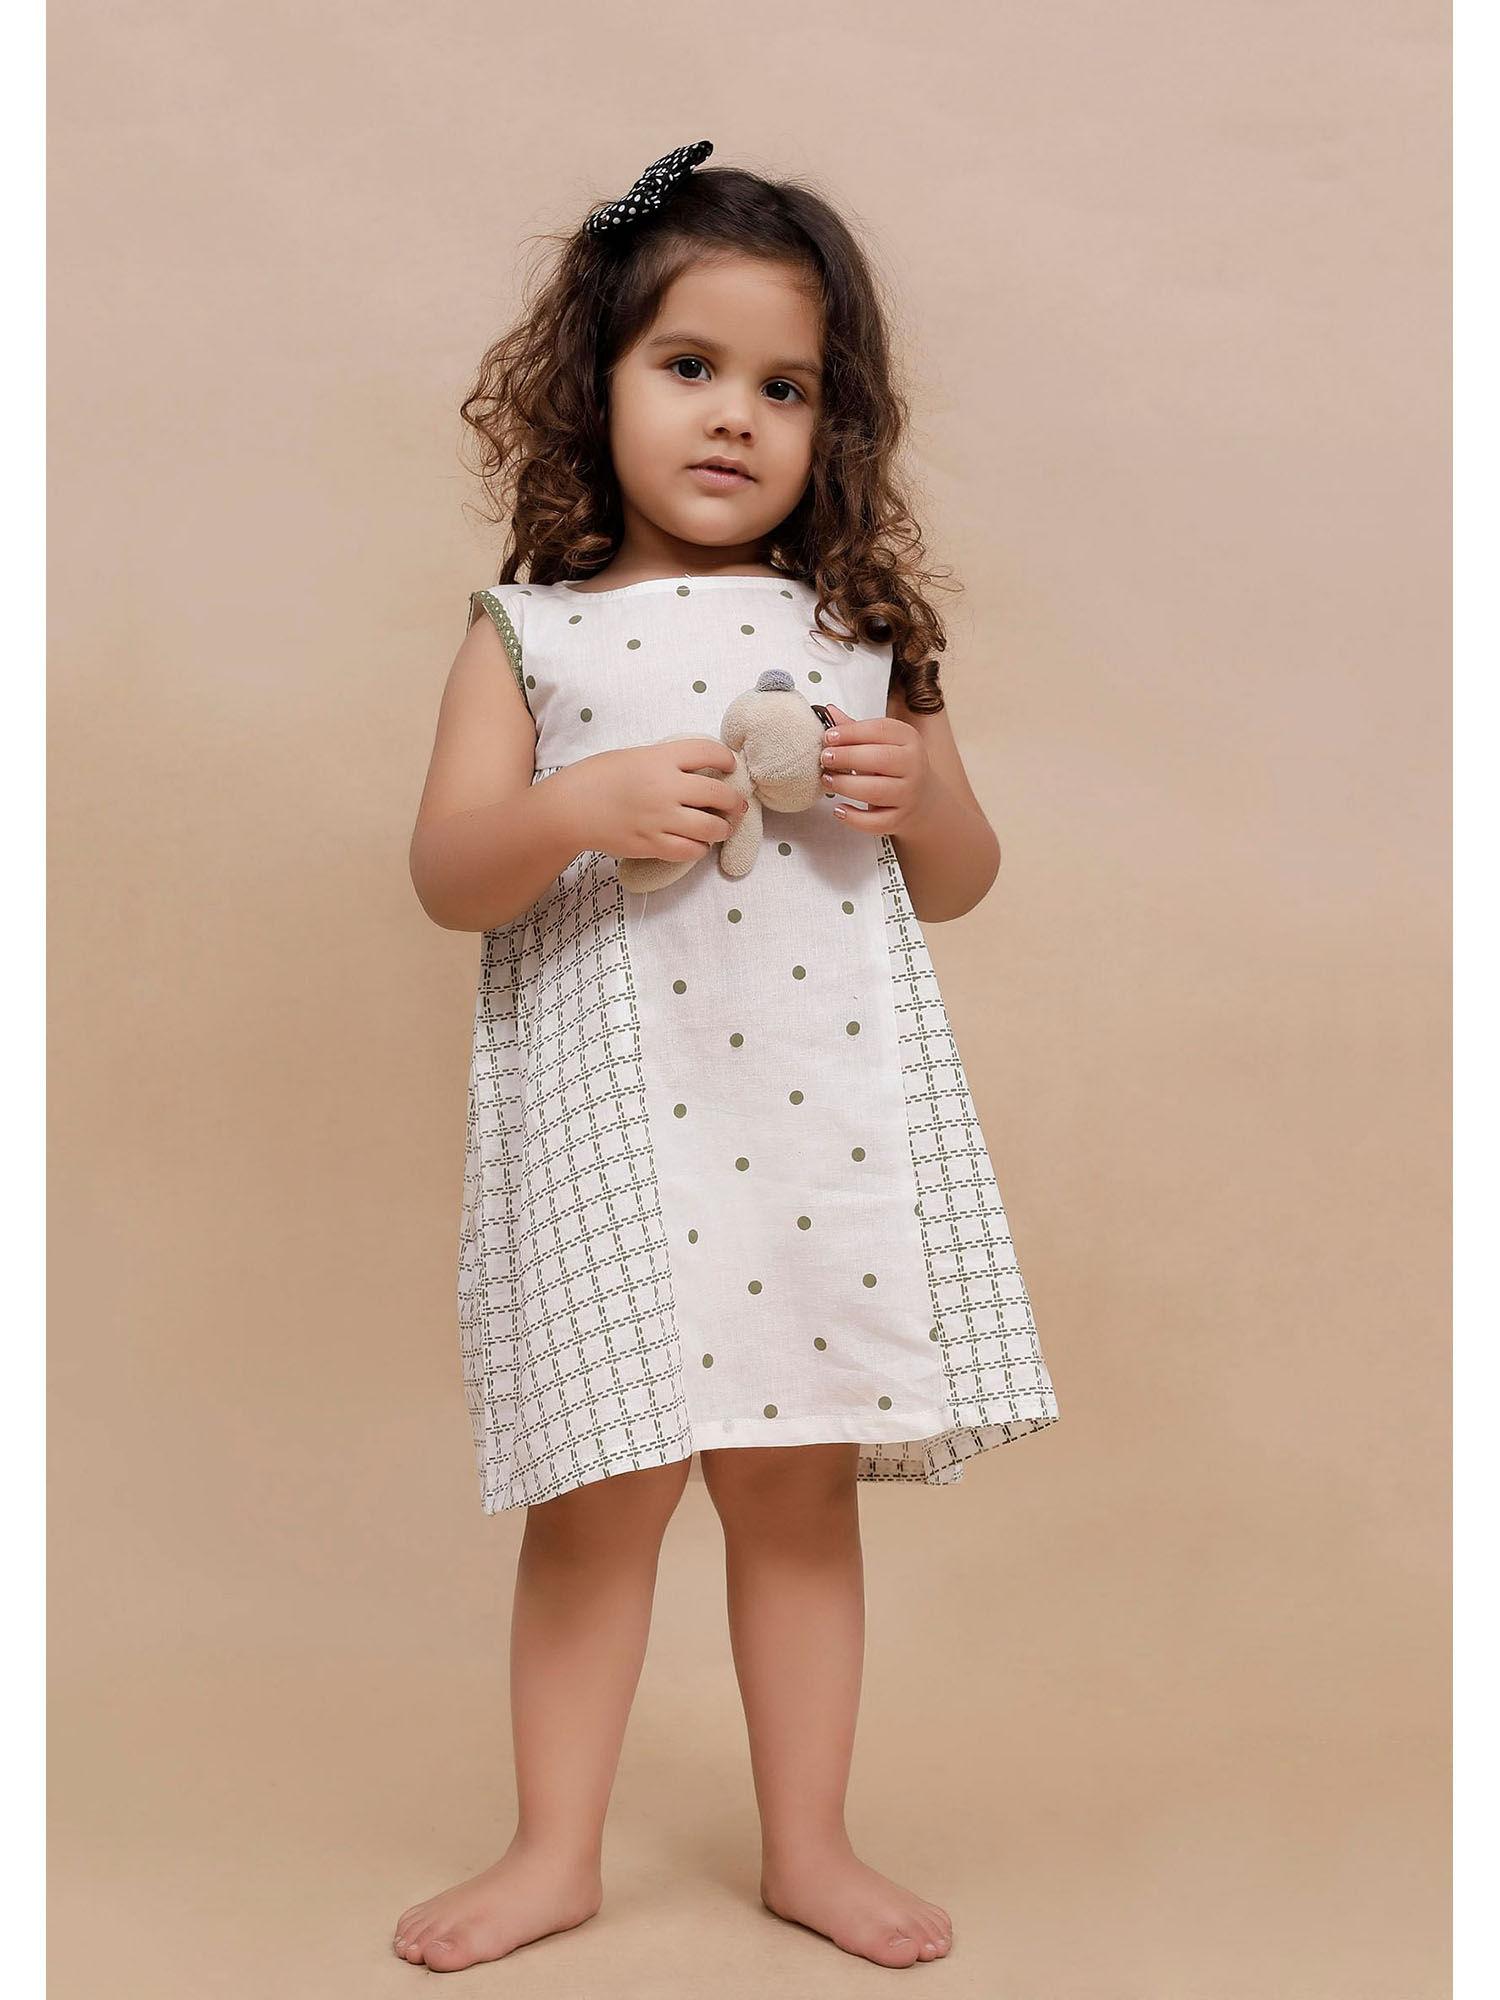 off-white check with polka dot printed dress